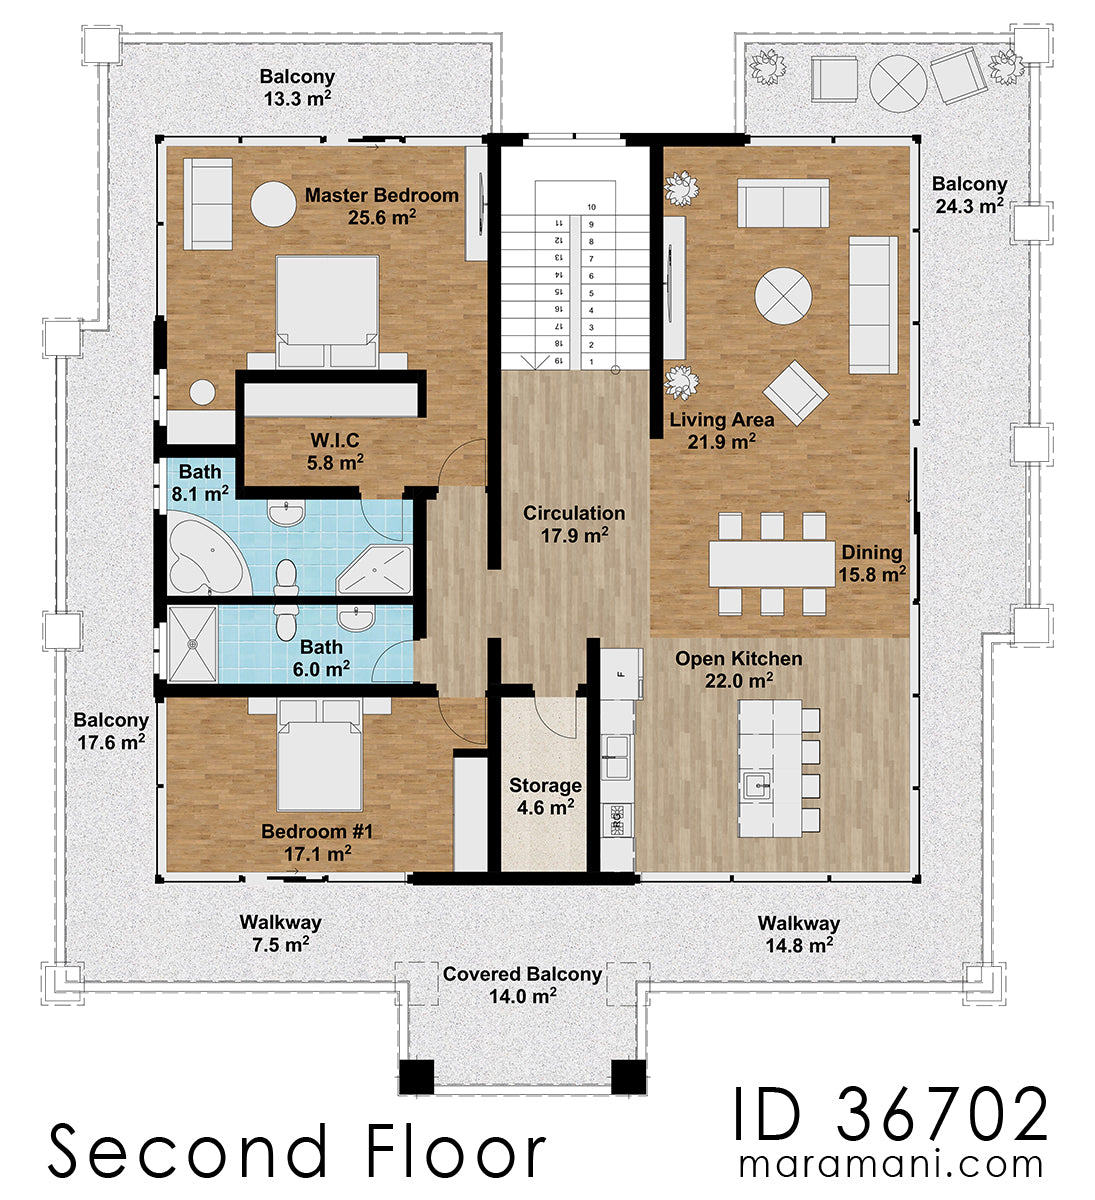 6 bedrooms Modern Mediterranean mansion - ID 36702